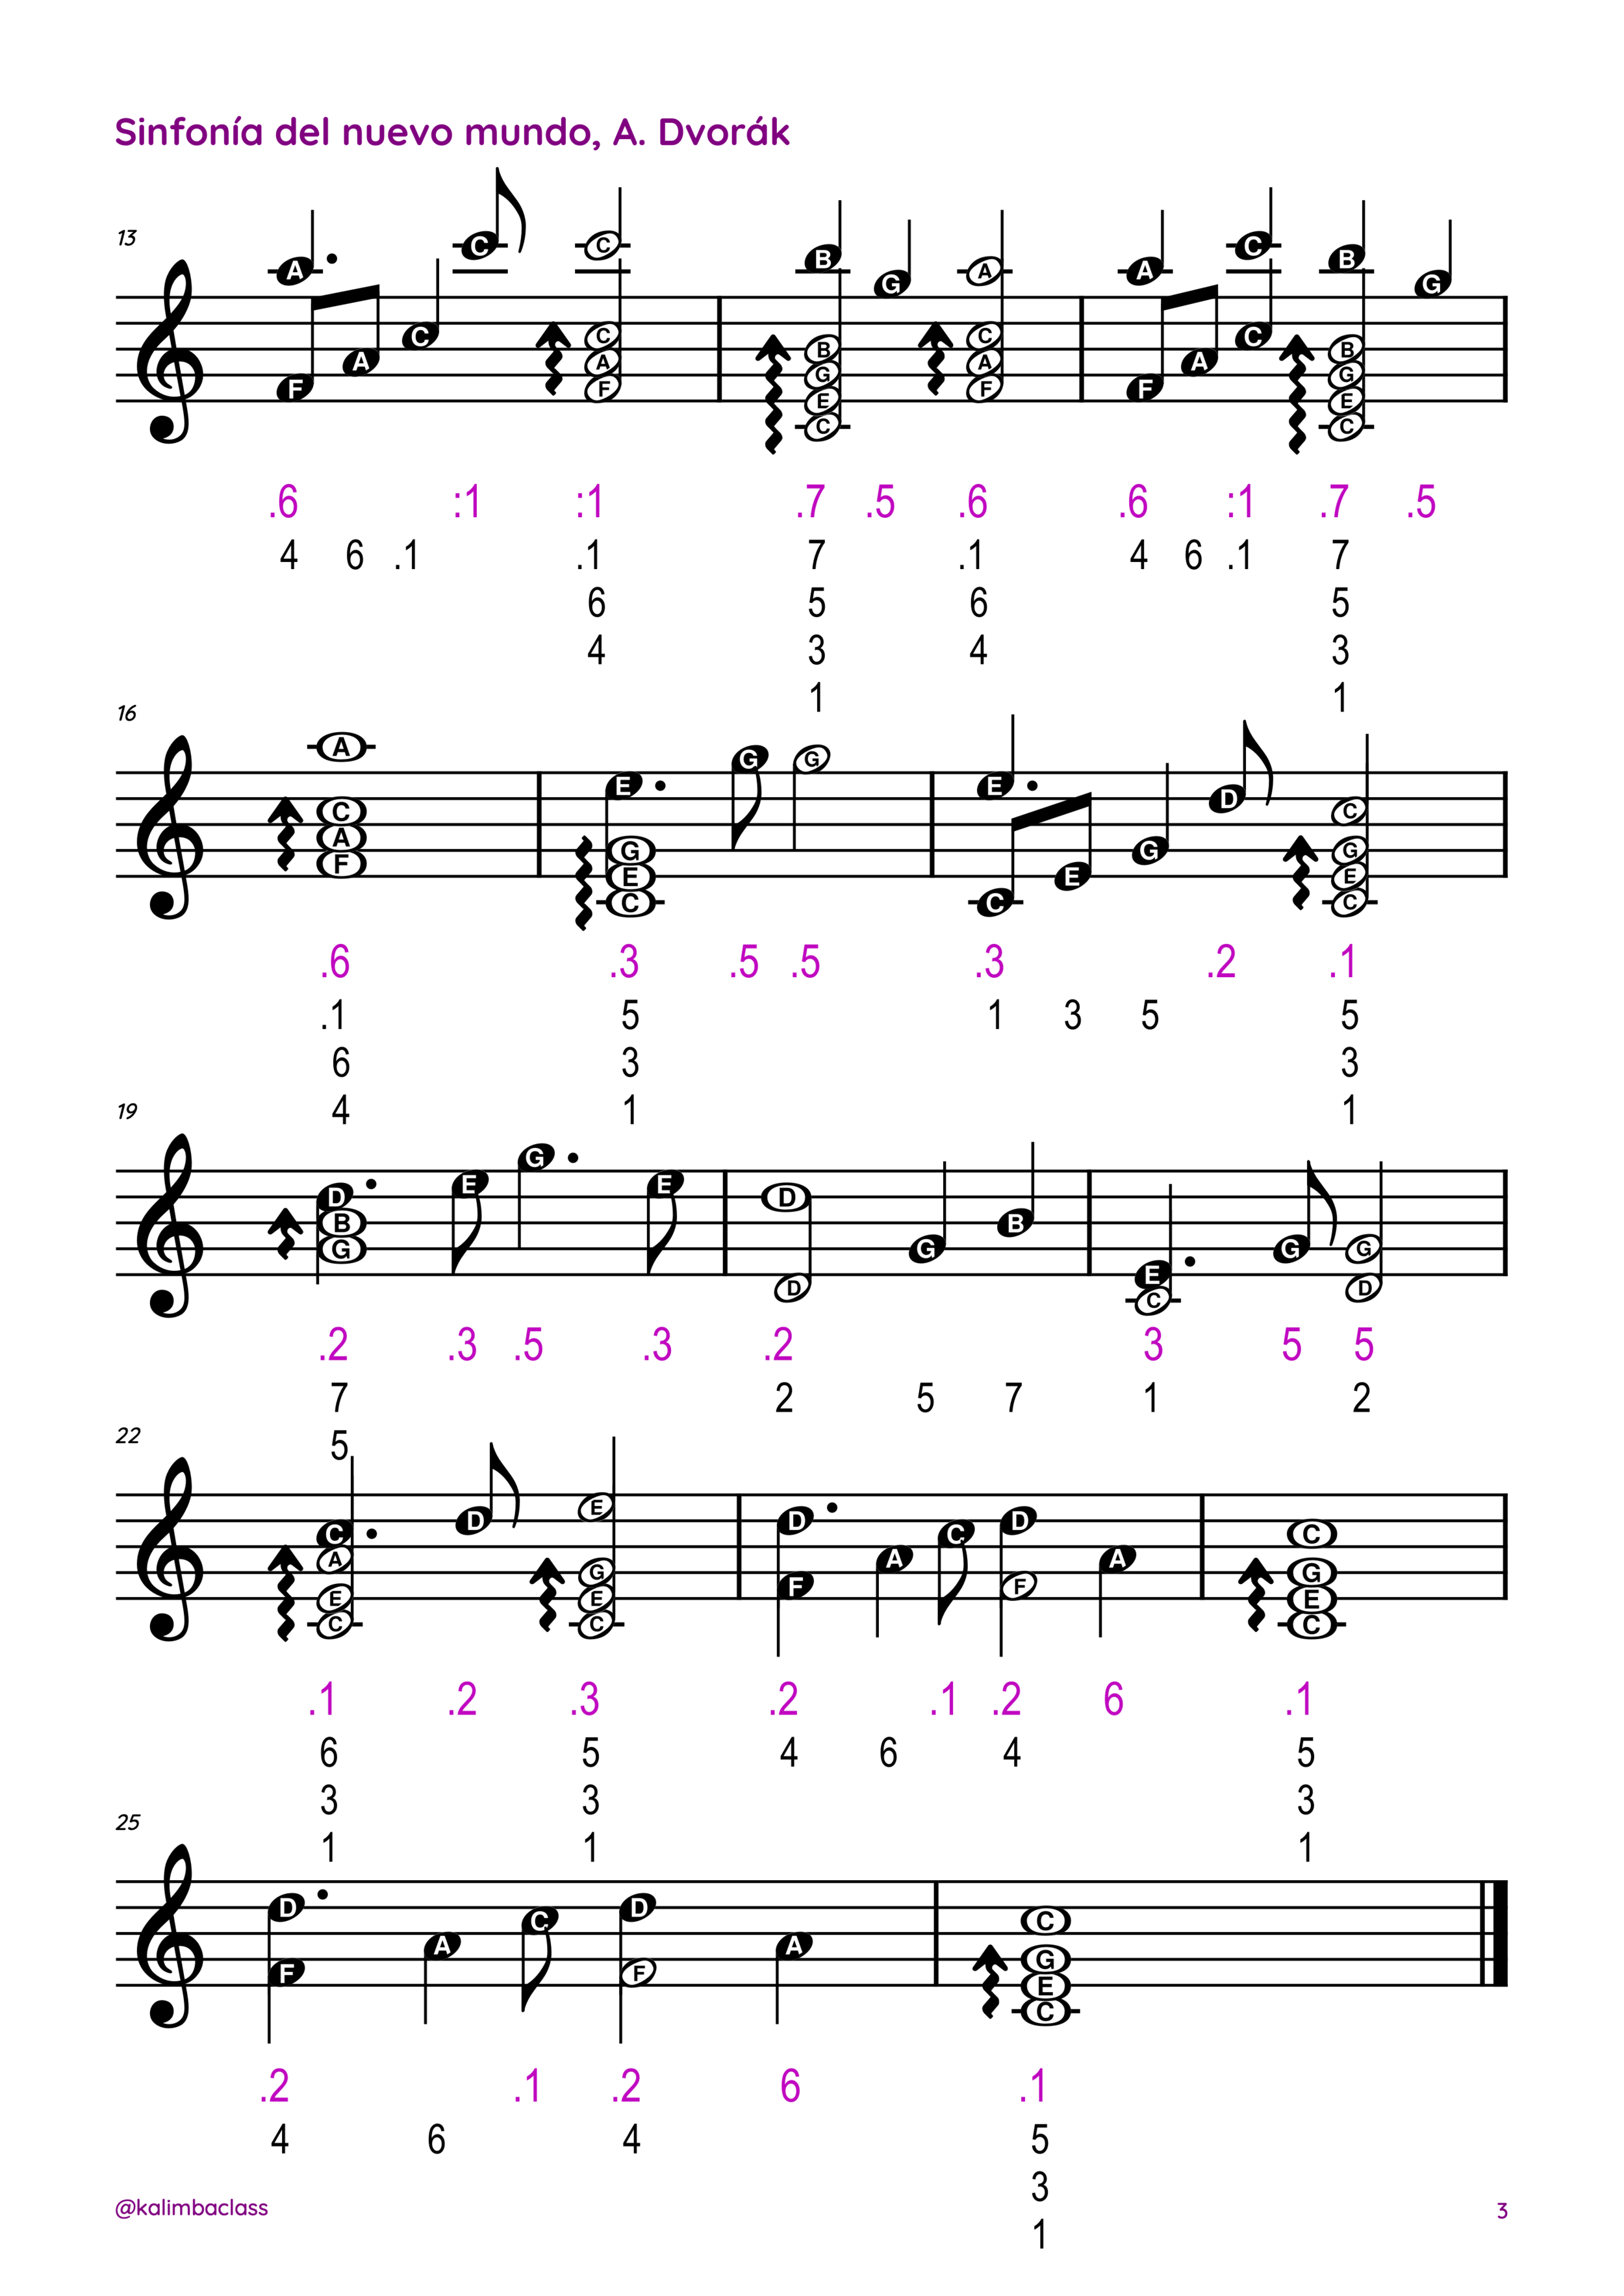 clases de kalimba tutorial partituras sheet music